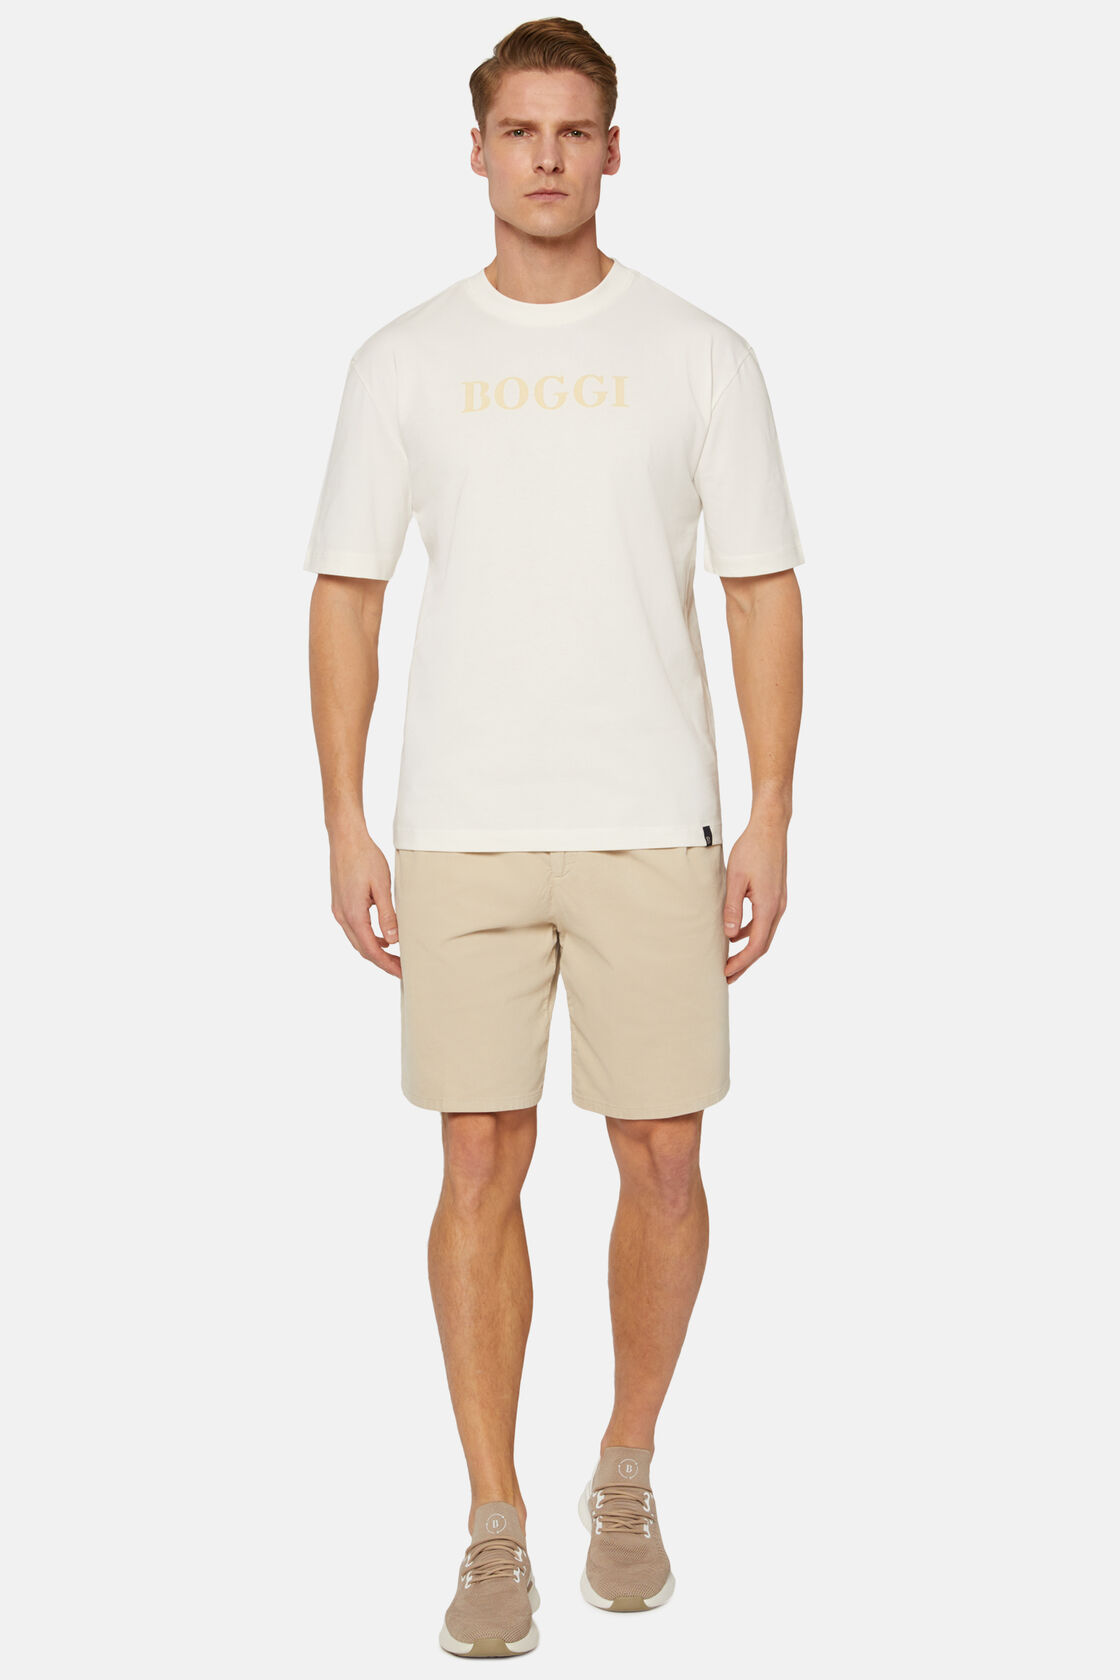 Ultra Light Cotton Velour Bermuda Shorts, Beige, hi-res